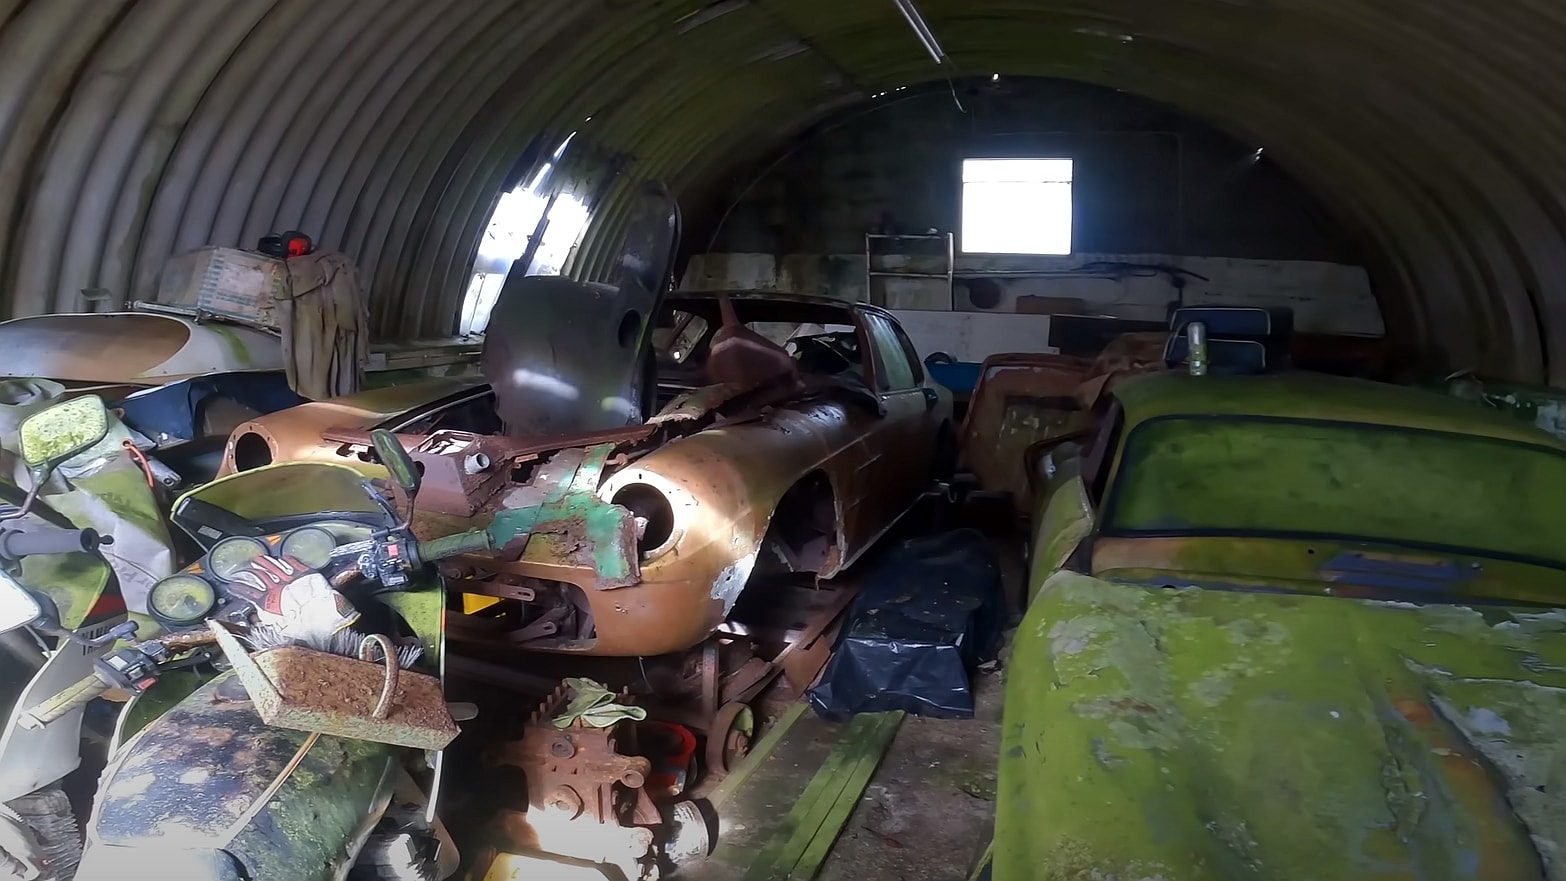 Resurrecting Rarity Discovery of Abandoned Maserati Mistral in British Junkyard